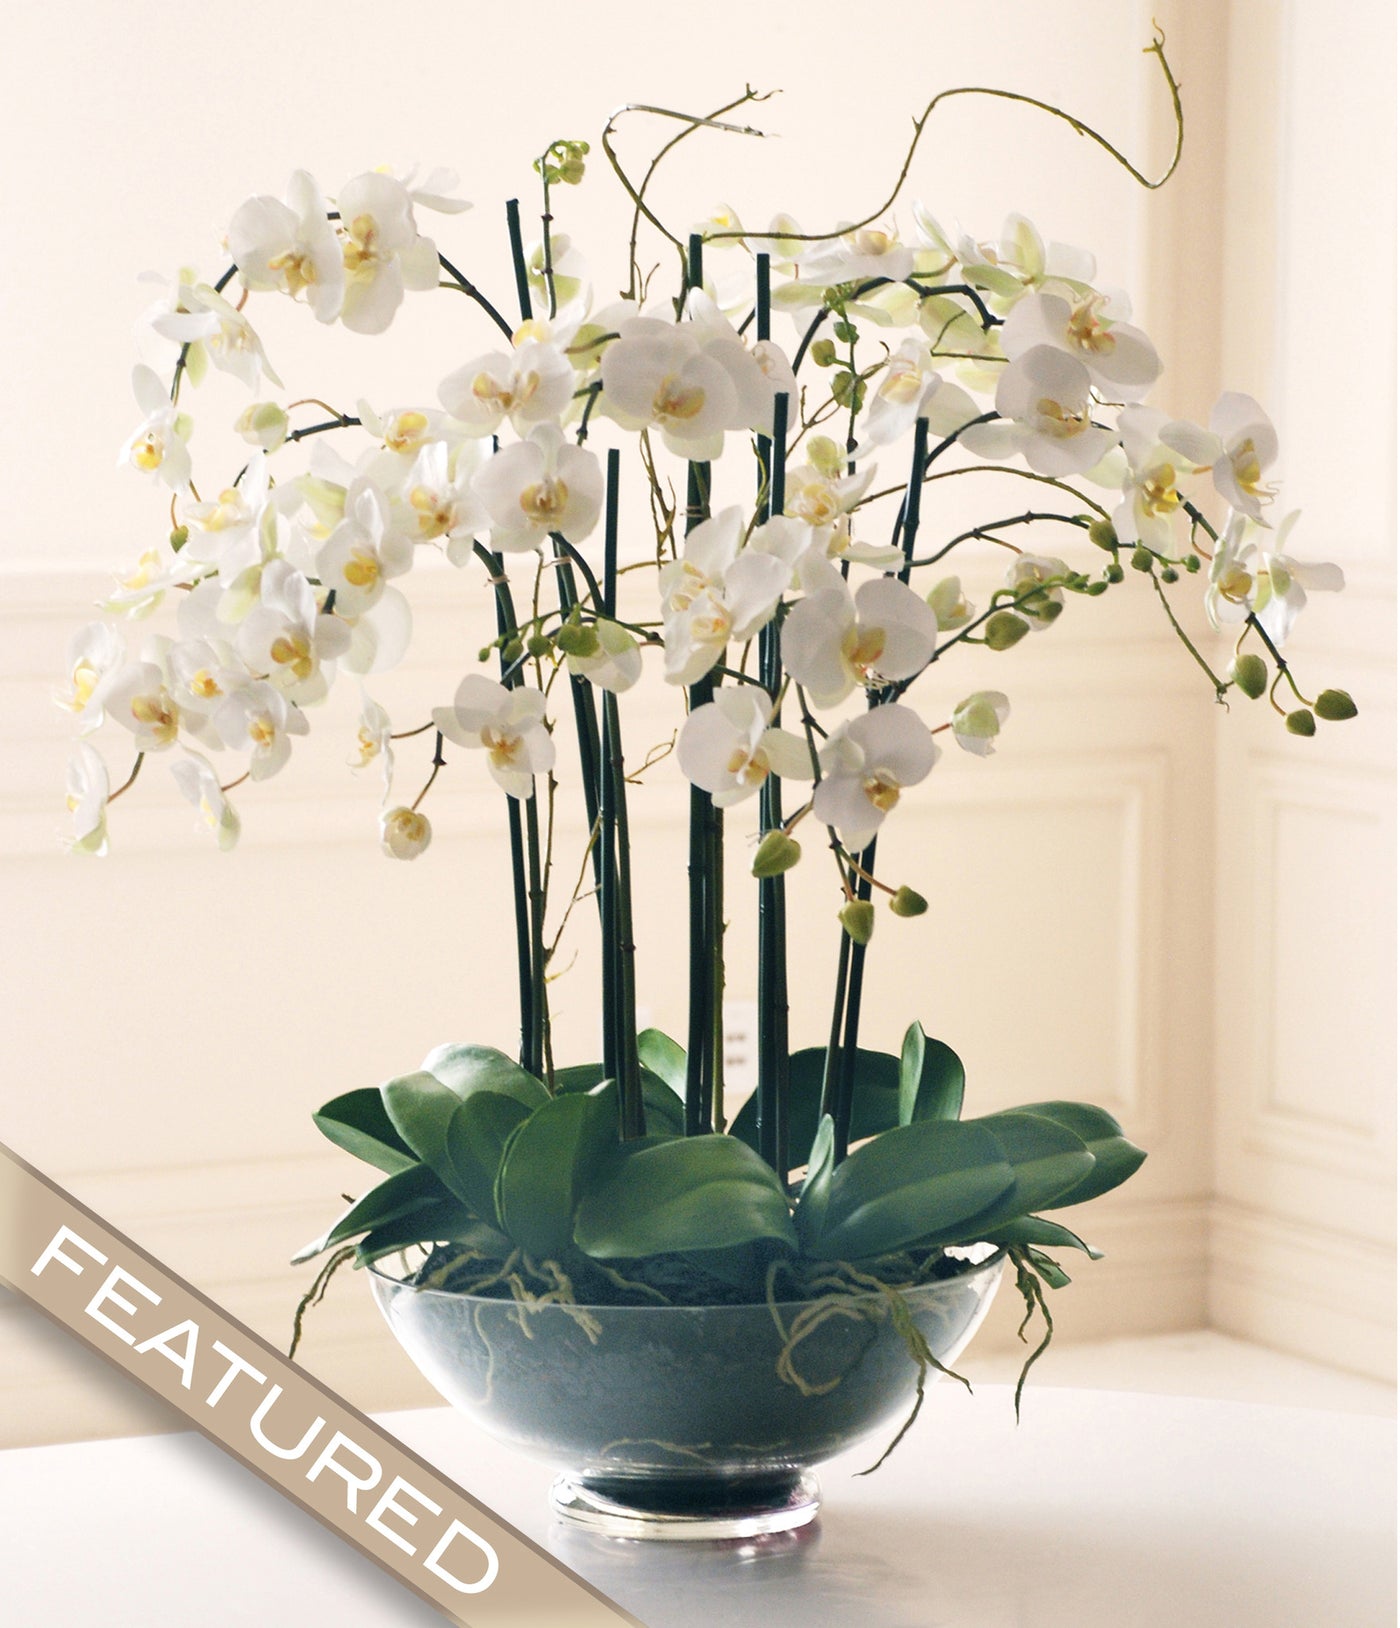 Elegant Delicate White Orchid Flower Pins - White (Set of 2)